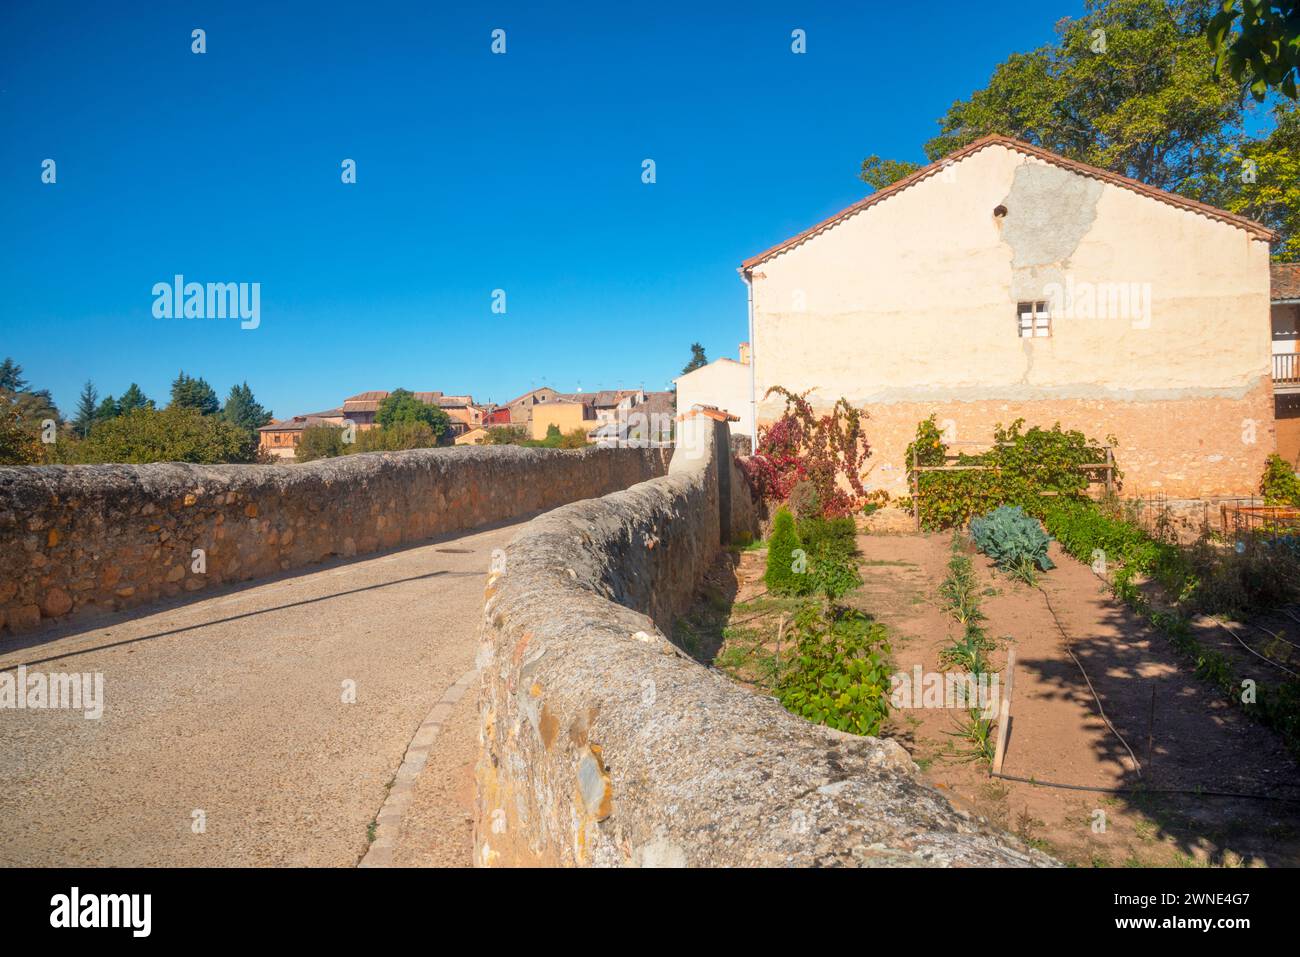 Street and vegetable garden. Ayllon, Segovia province, Castilla Leon, Spain. Stock Photo